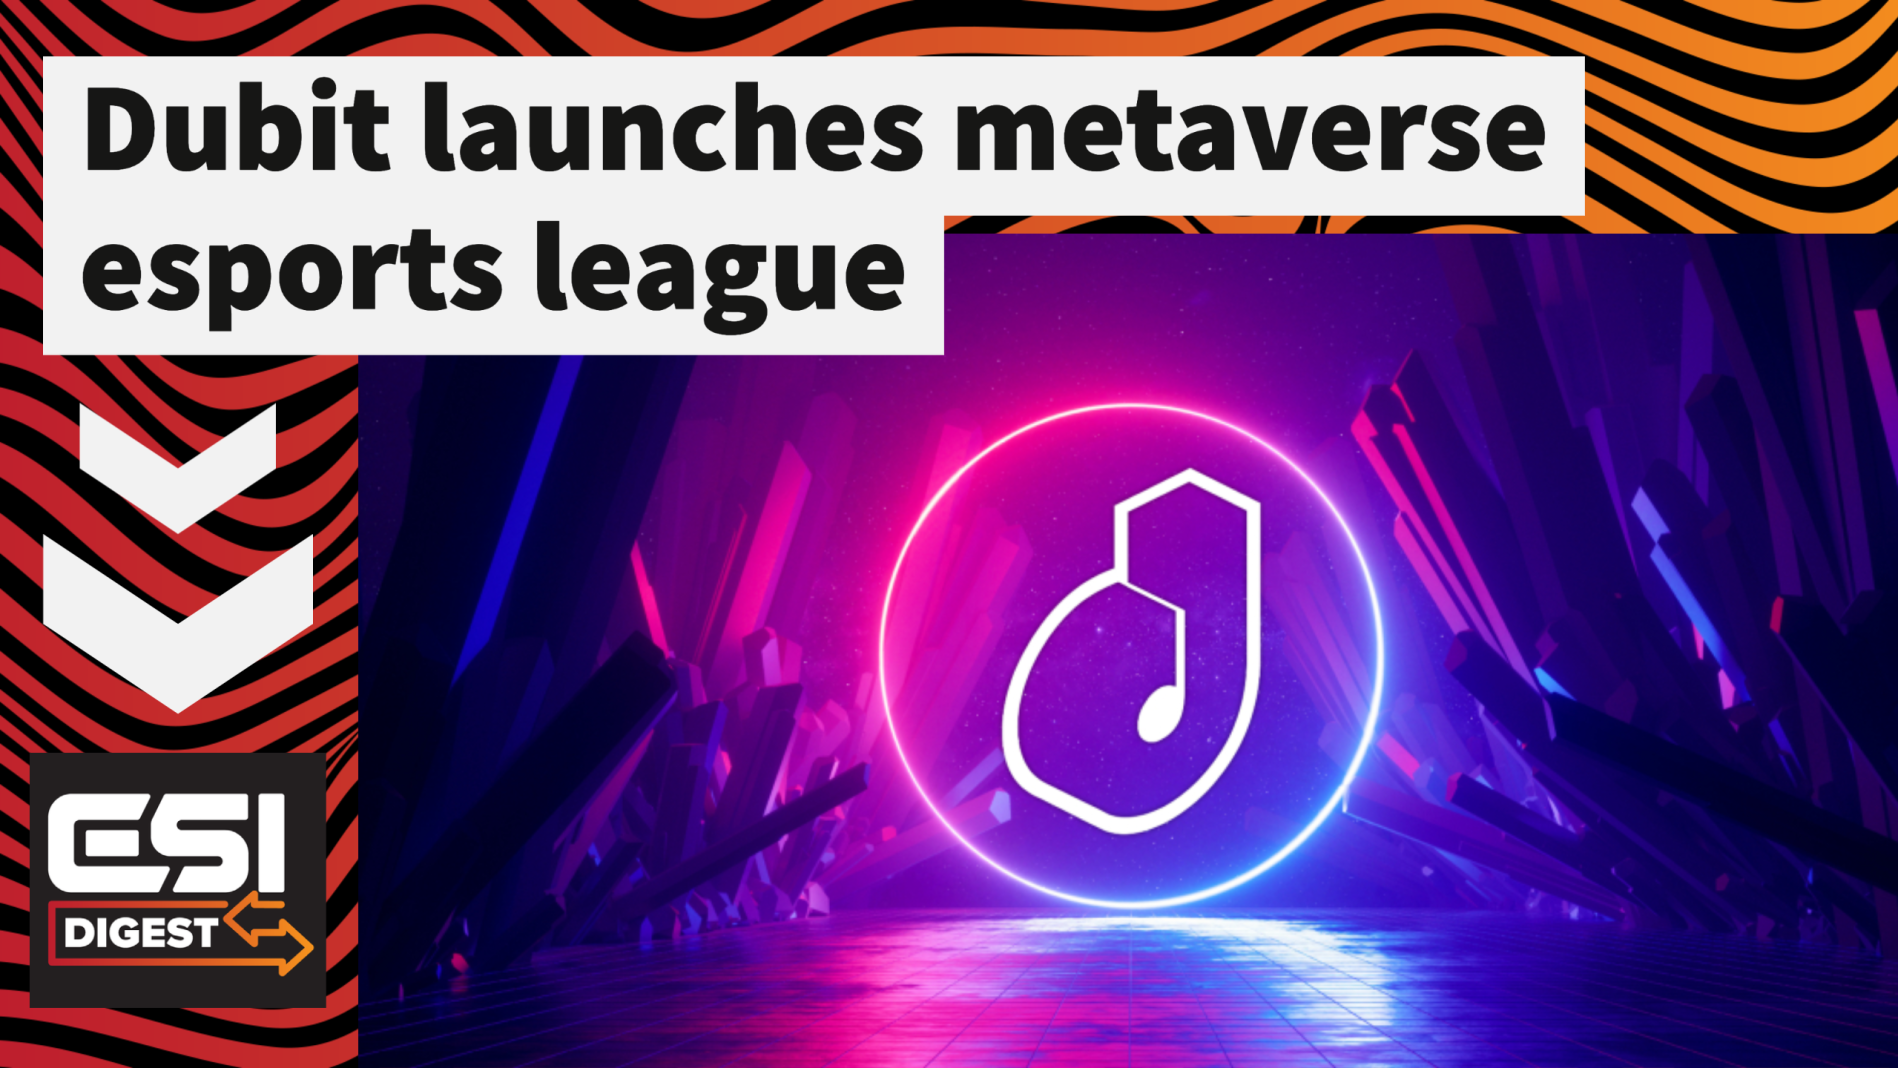 Dubit launches metaverse esports league, Riot Games promotes John Needham | ESI Digest #69